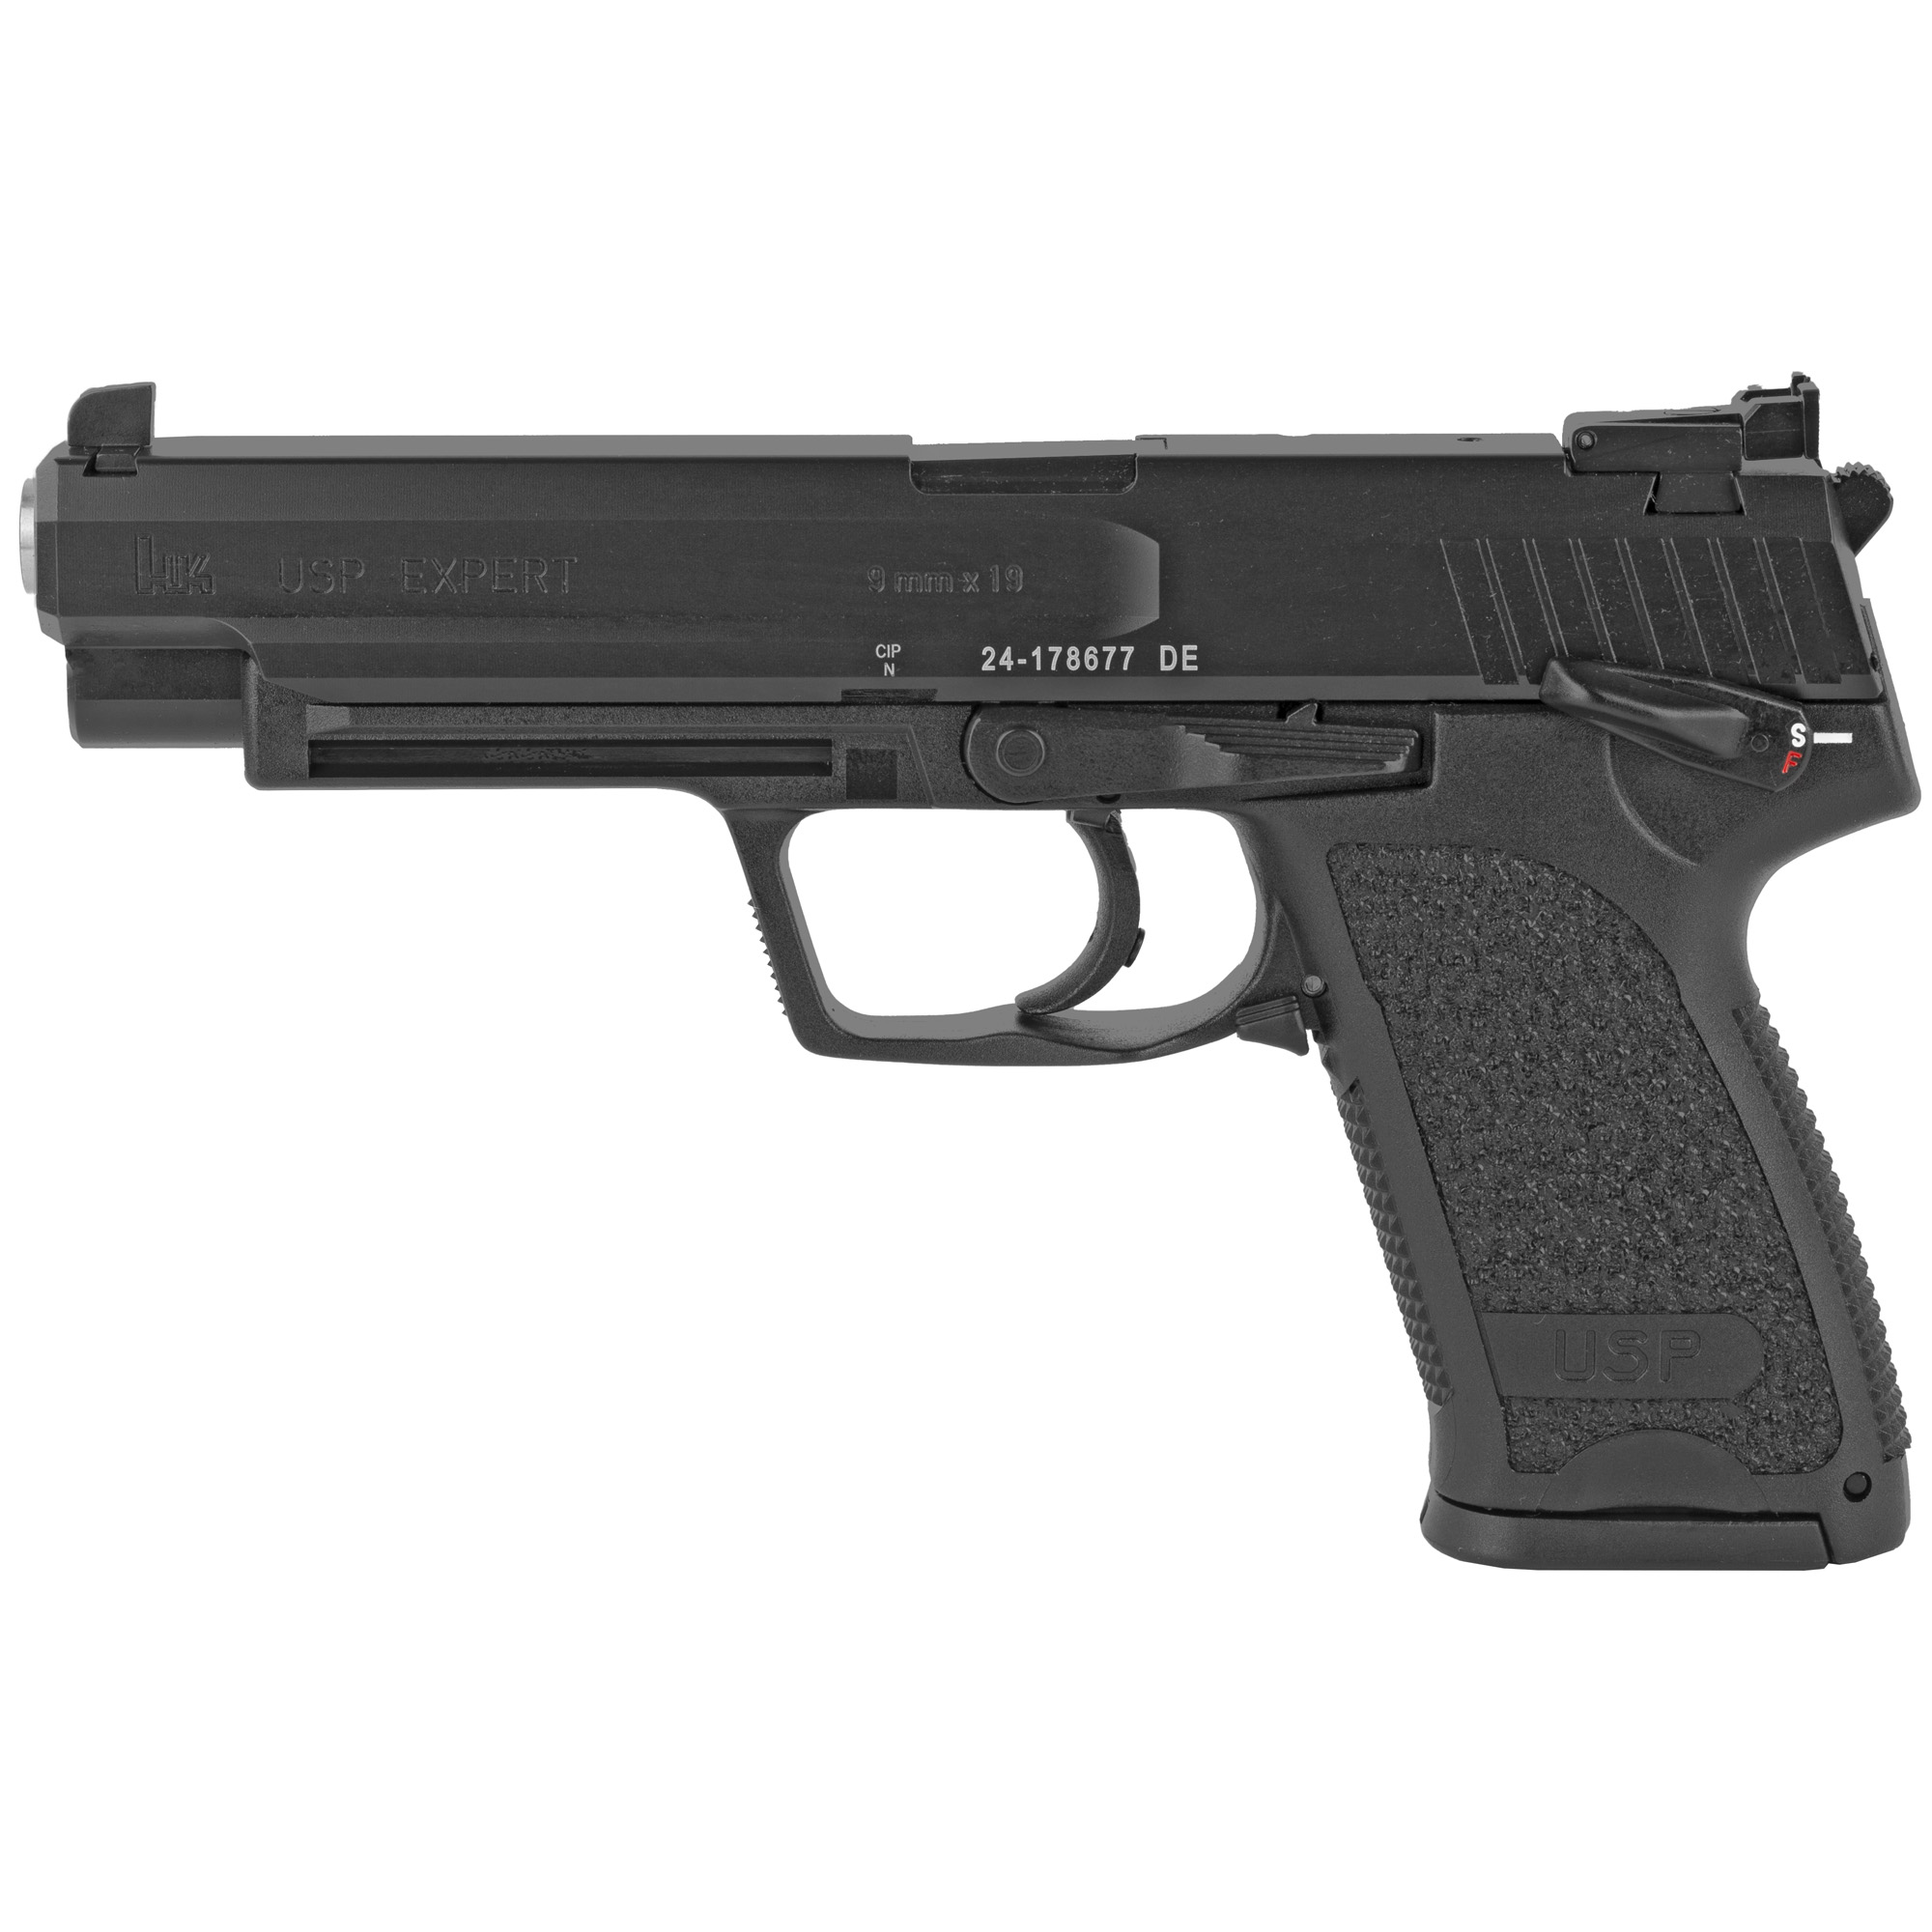 Heckler & Koch 9mm USP9, Expert, V1, DA/SA, Semi-Automatic, Polymer Frame Pistol, Full Size, 5.2” Barrel, Black, Adjustable Sigh